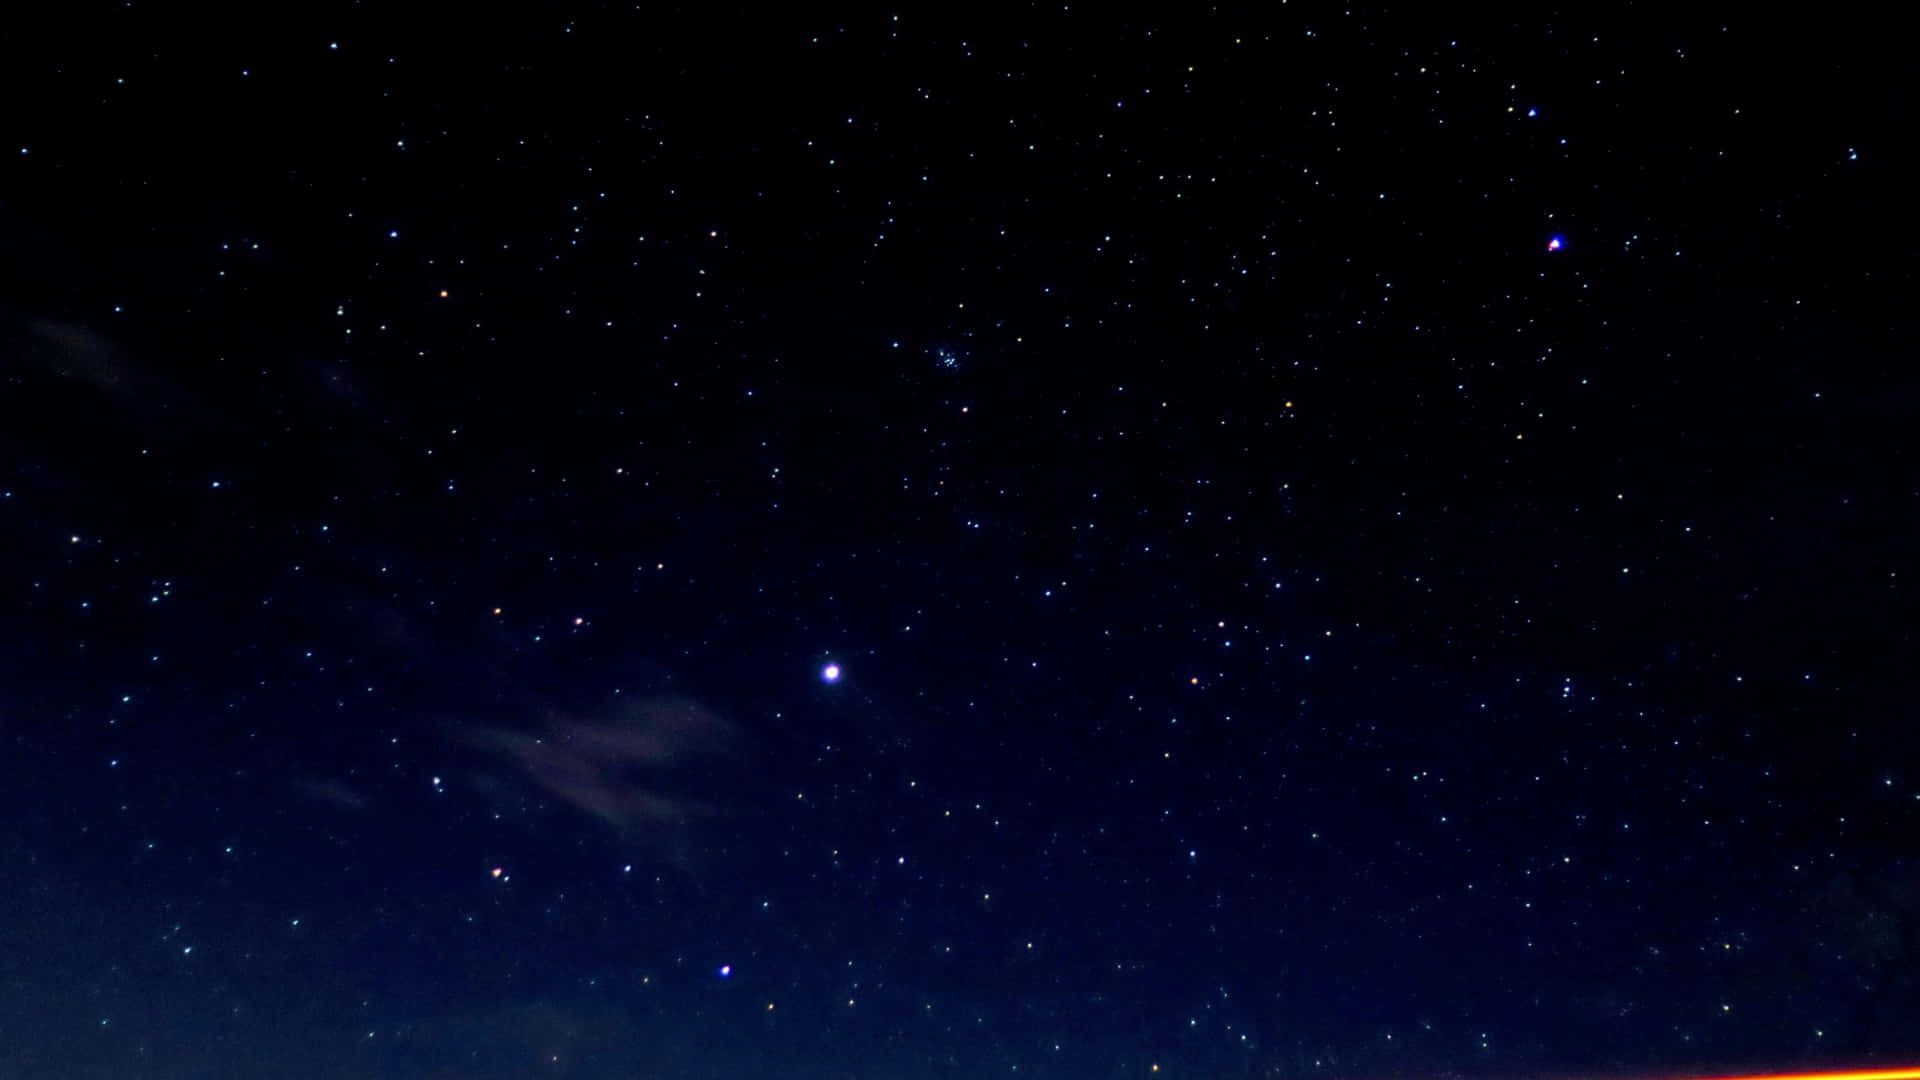 A beautiful night sky studded with stars.